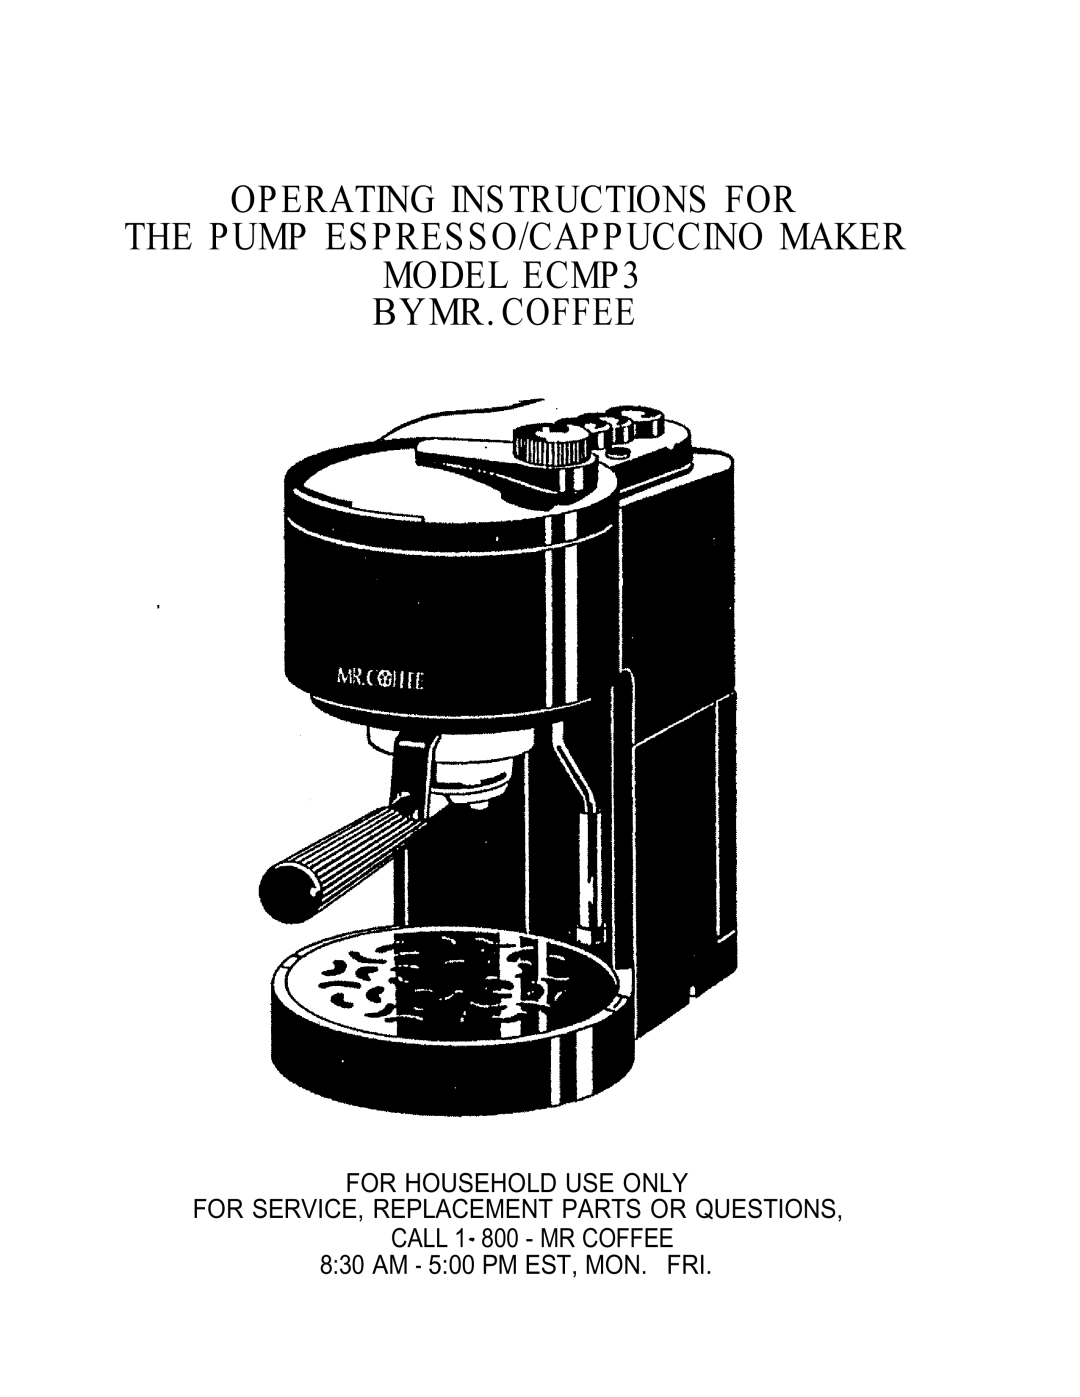 Mr. Coffee ECMP3 manual 